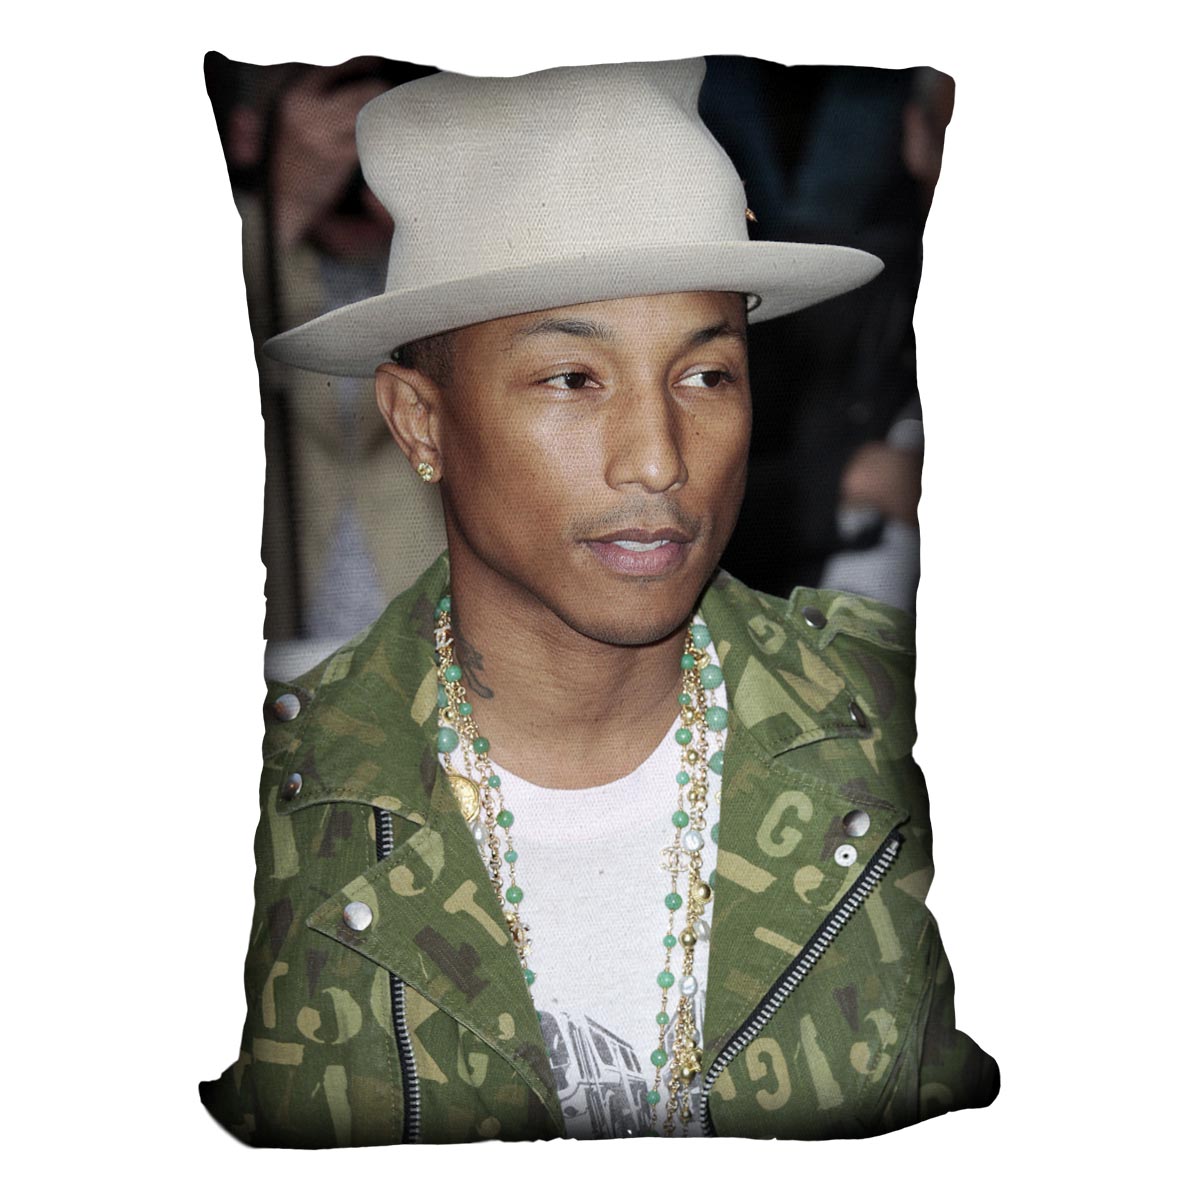 Pharrell Williams in a hat Cushion